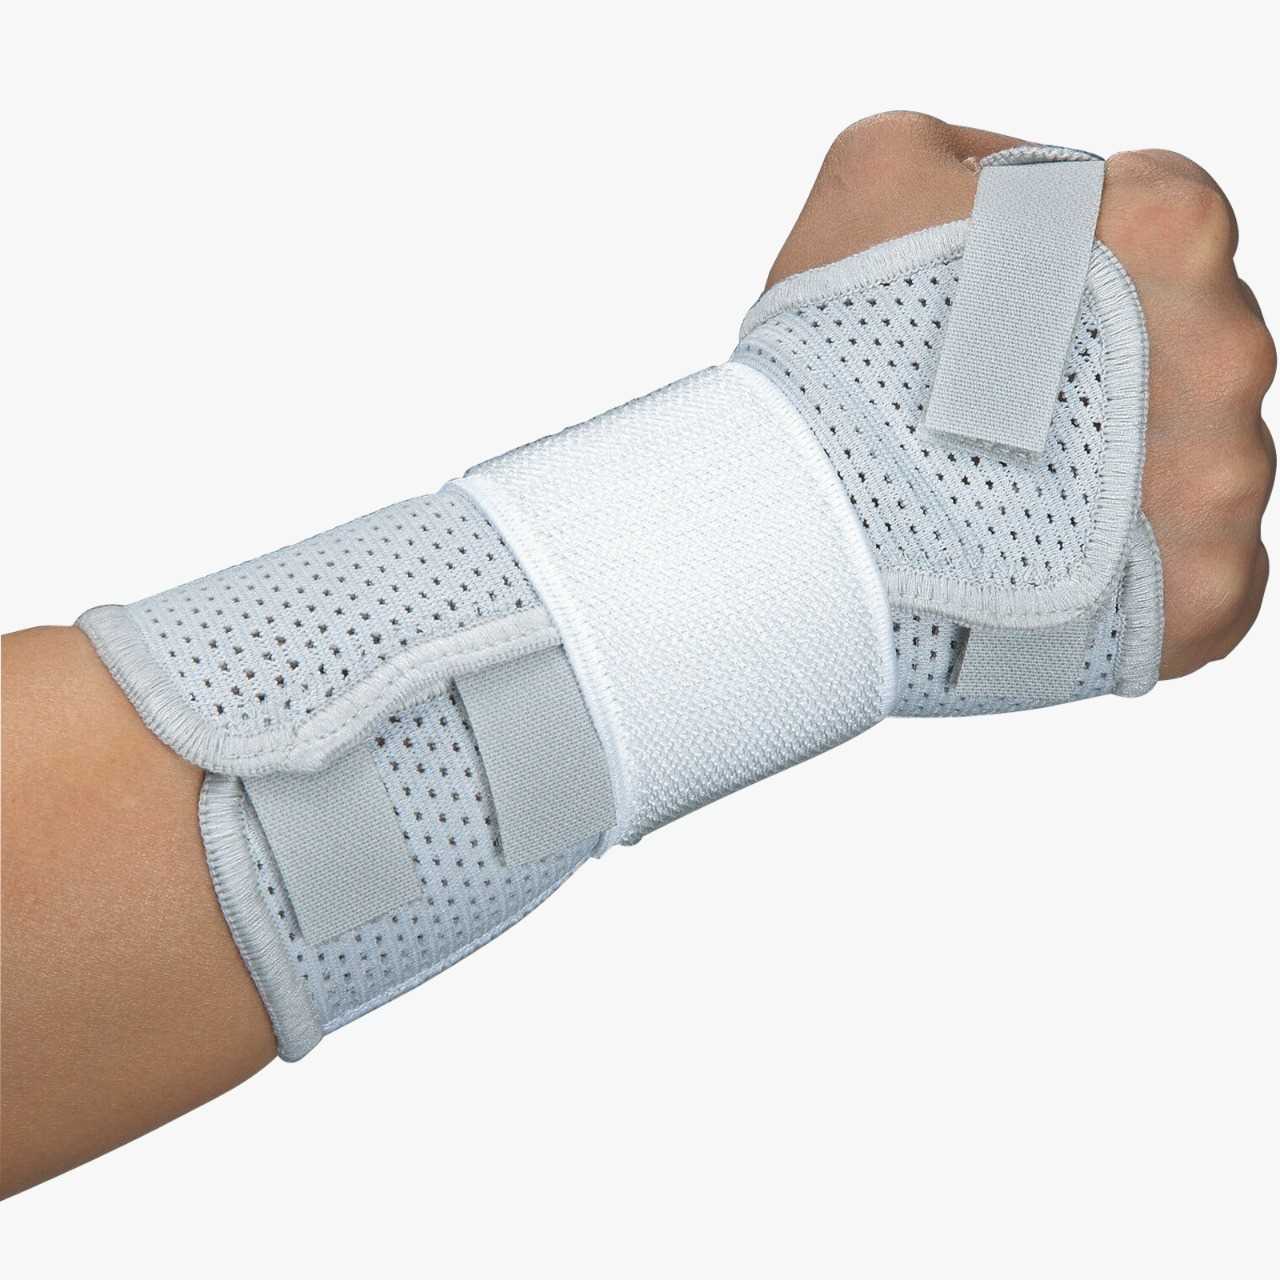 Medium Right Hand Breathable Wrist Support Brace Splint For Carpal Tunnel, Arthritis Sprain Strain